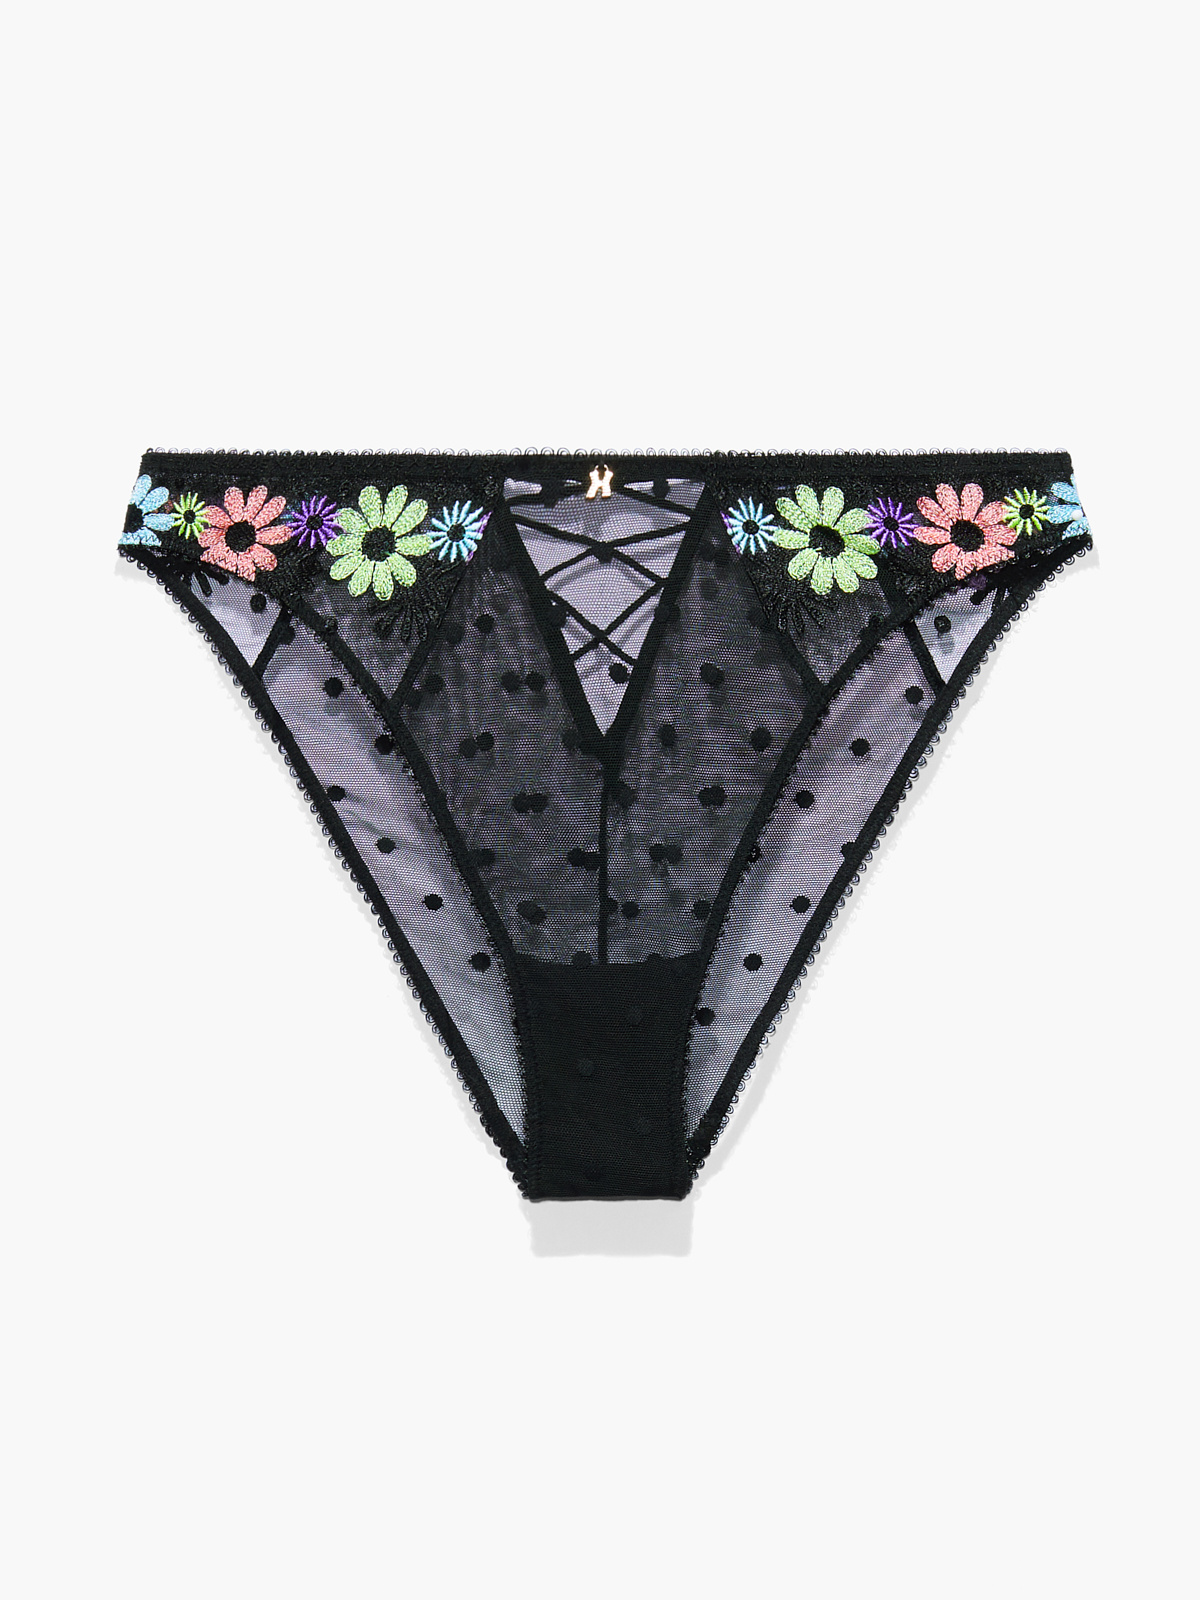 Free Spirit Floral Embroidery High Leg Bikini in Black | SAVAGE X FENTY